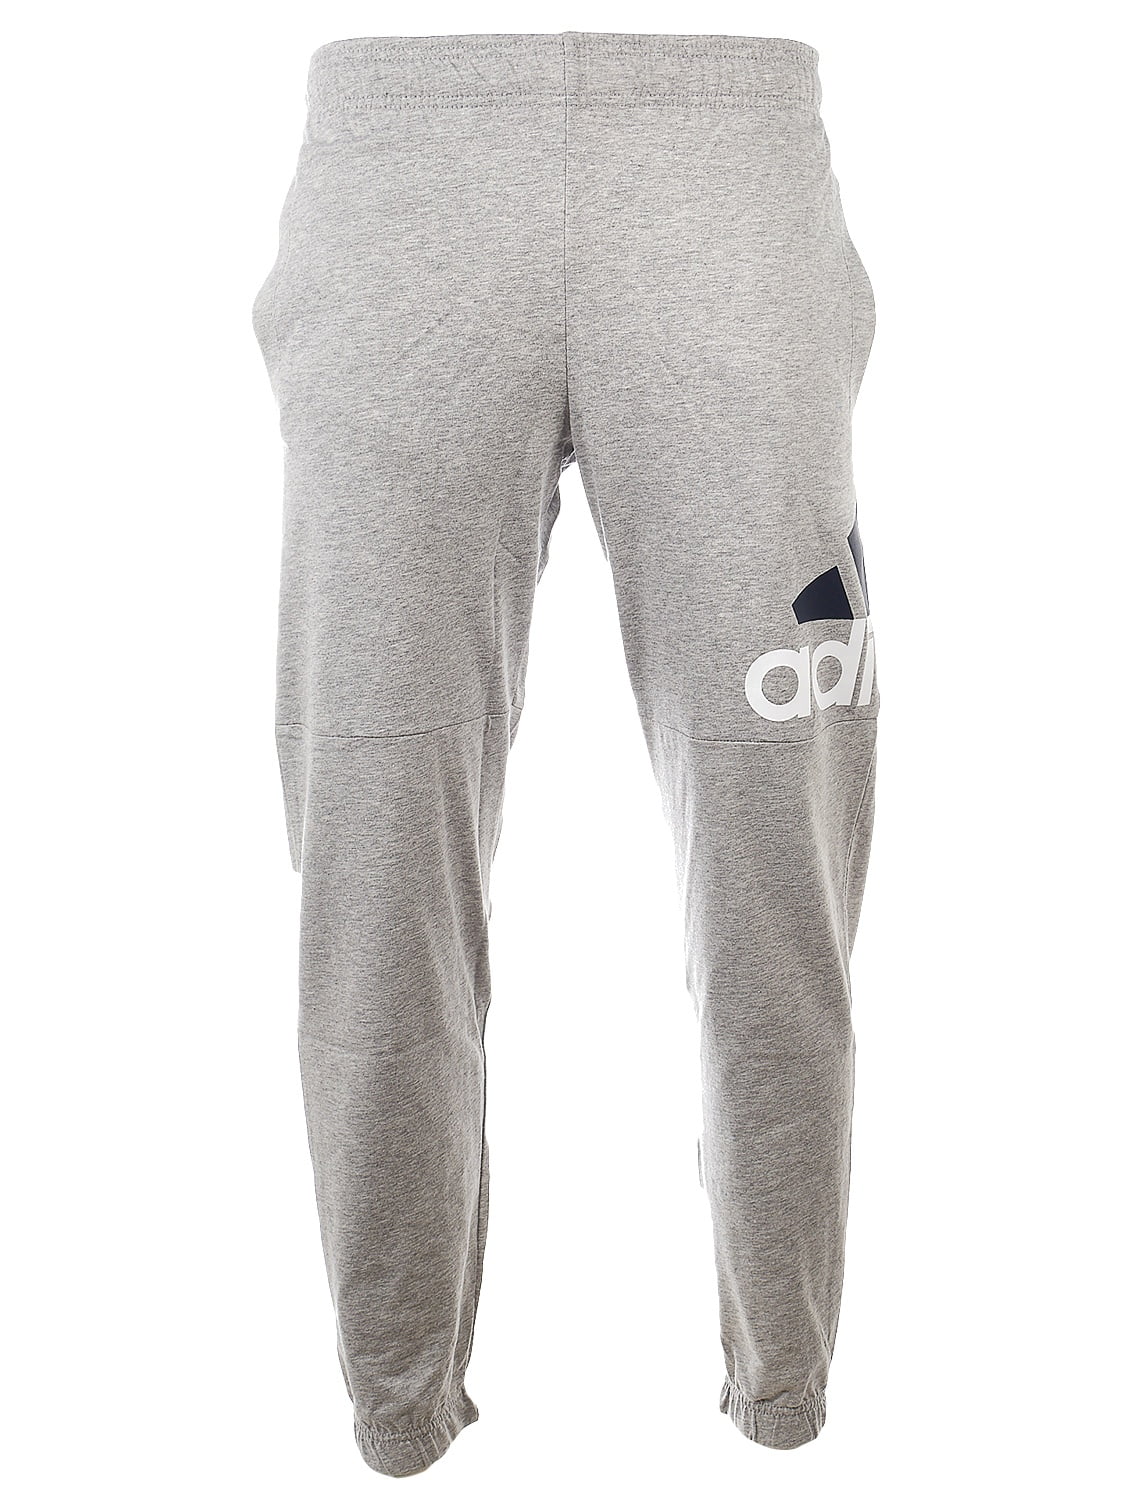 Adidas Essentials Mens Performance Medium Heather/White/Black - XL - Logo Grey - Pants